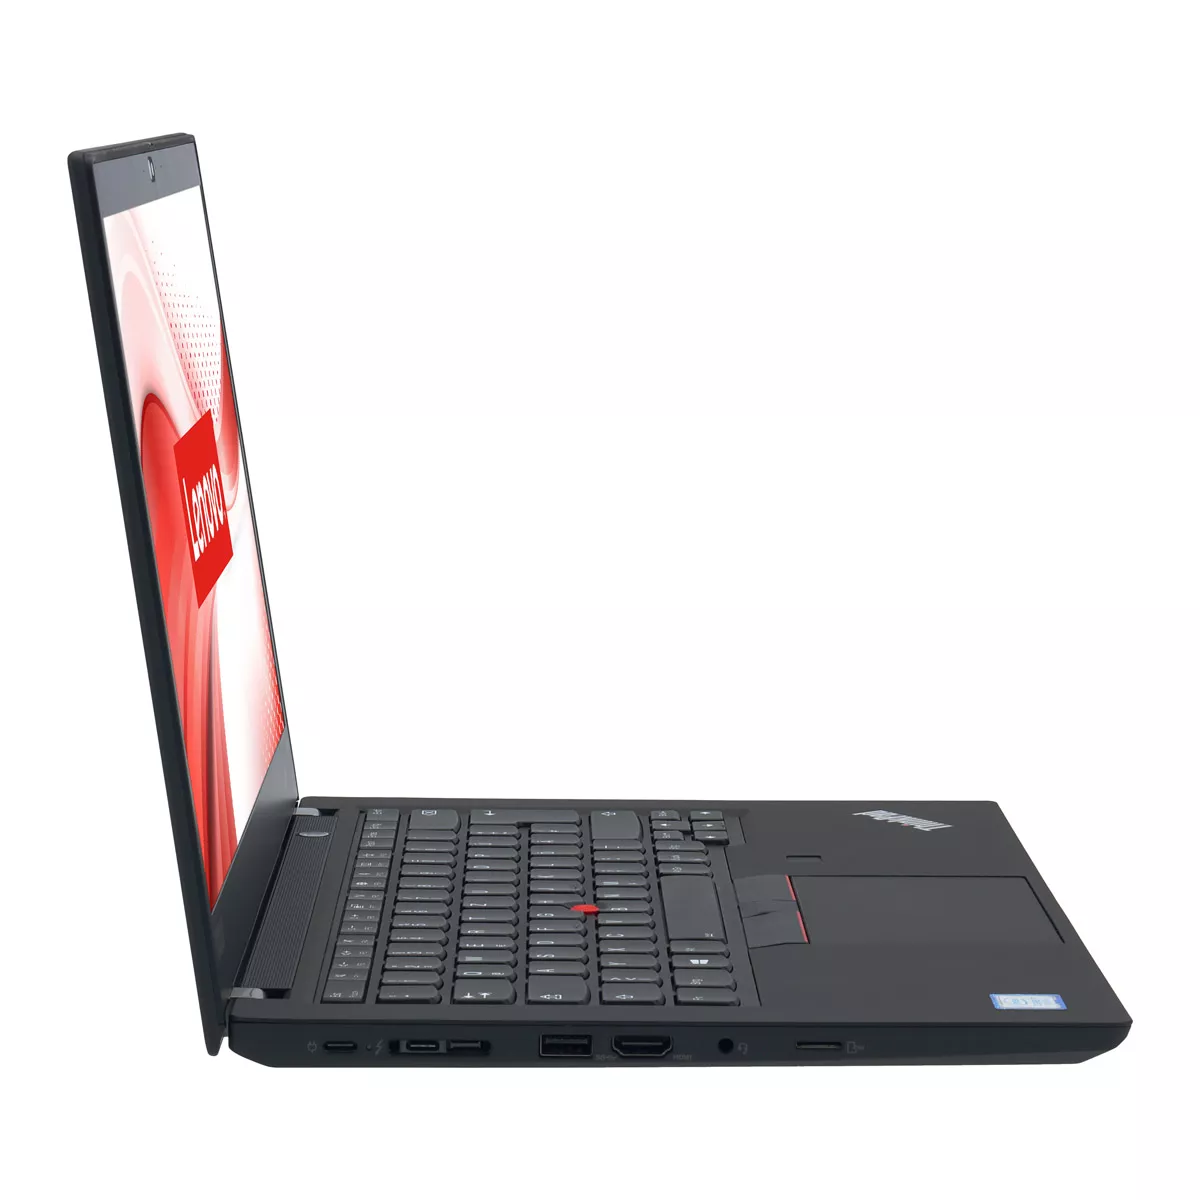 Lenovo ThinkPad T490 Core i7 8665U 16 GB 500 GB M.2 nVME SSD Webcam Touch A